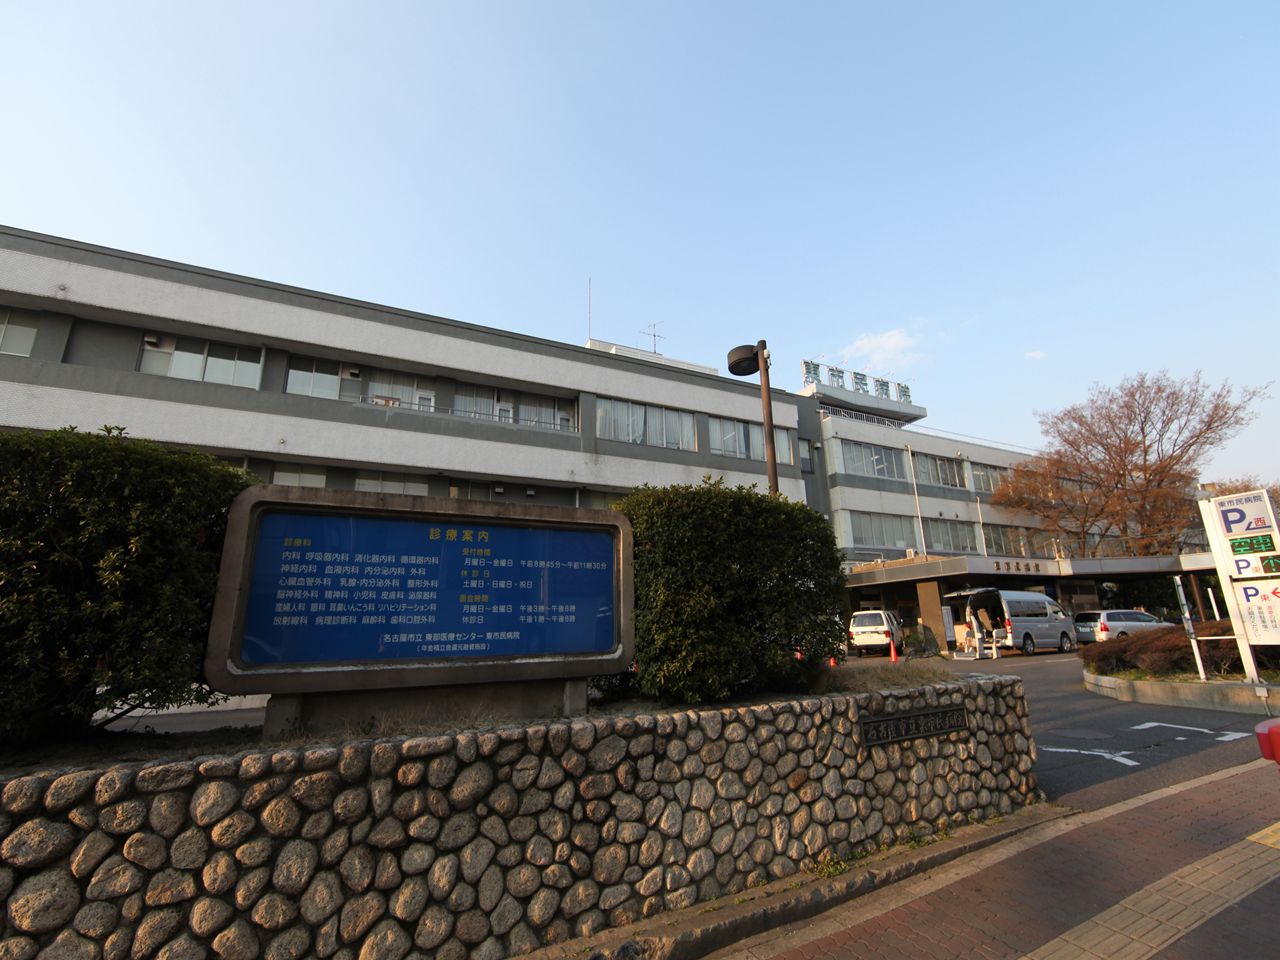 Hospital. 949m to Nagoya Municipal Eastern Medical Center East City Hospital (General Hospital) (hospital)